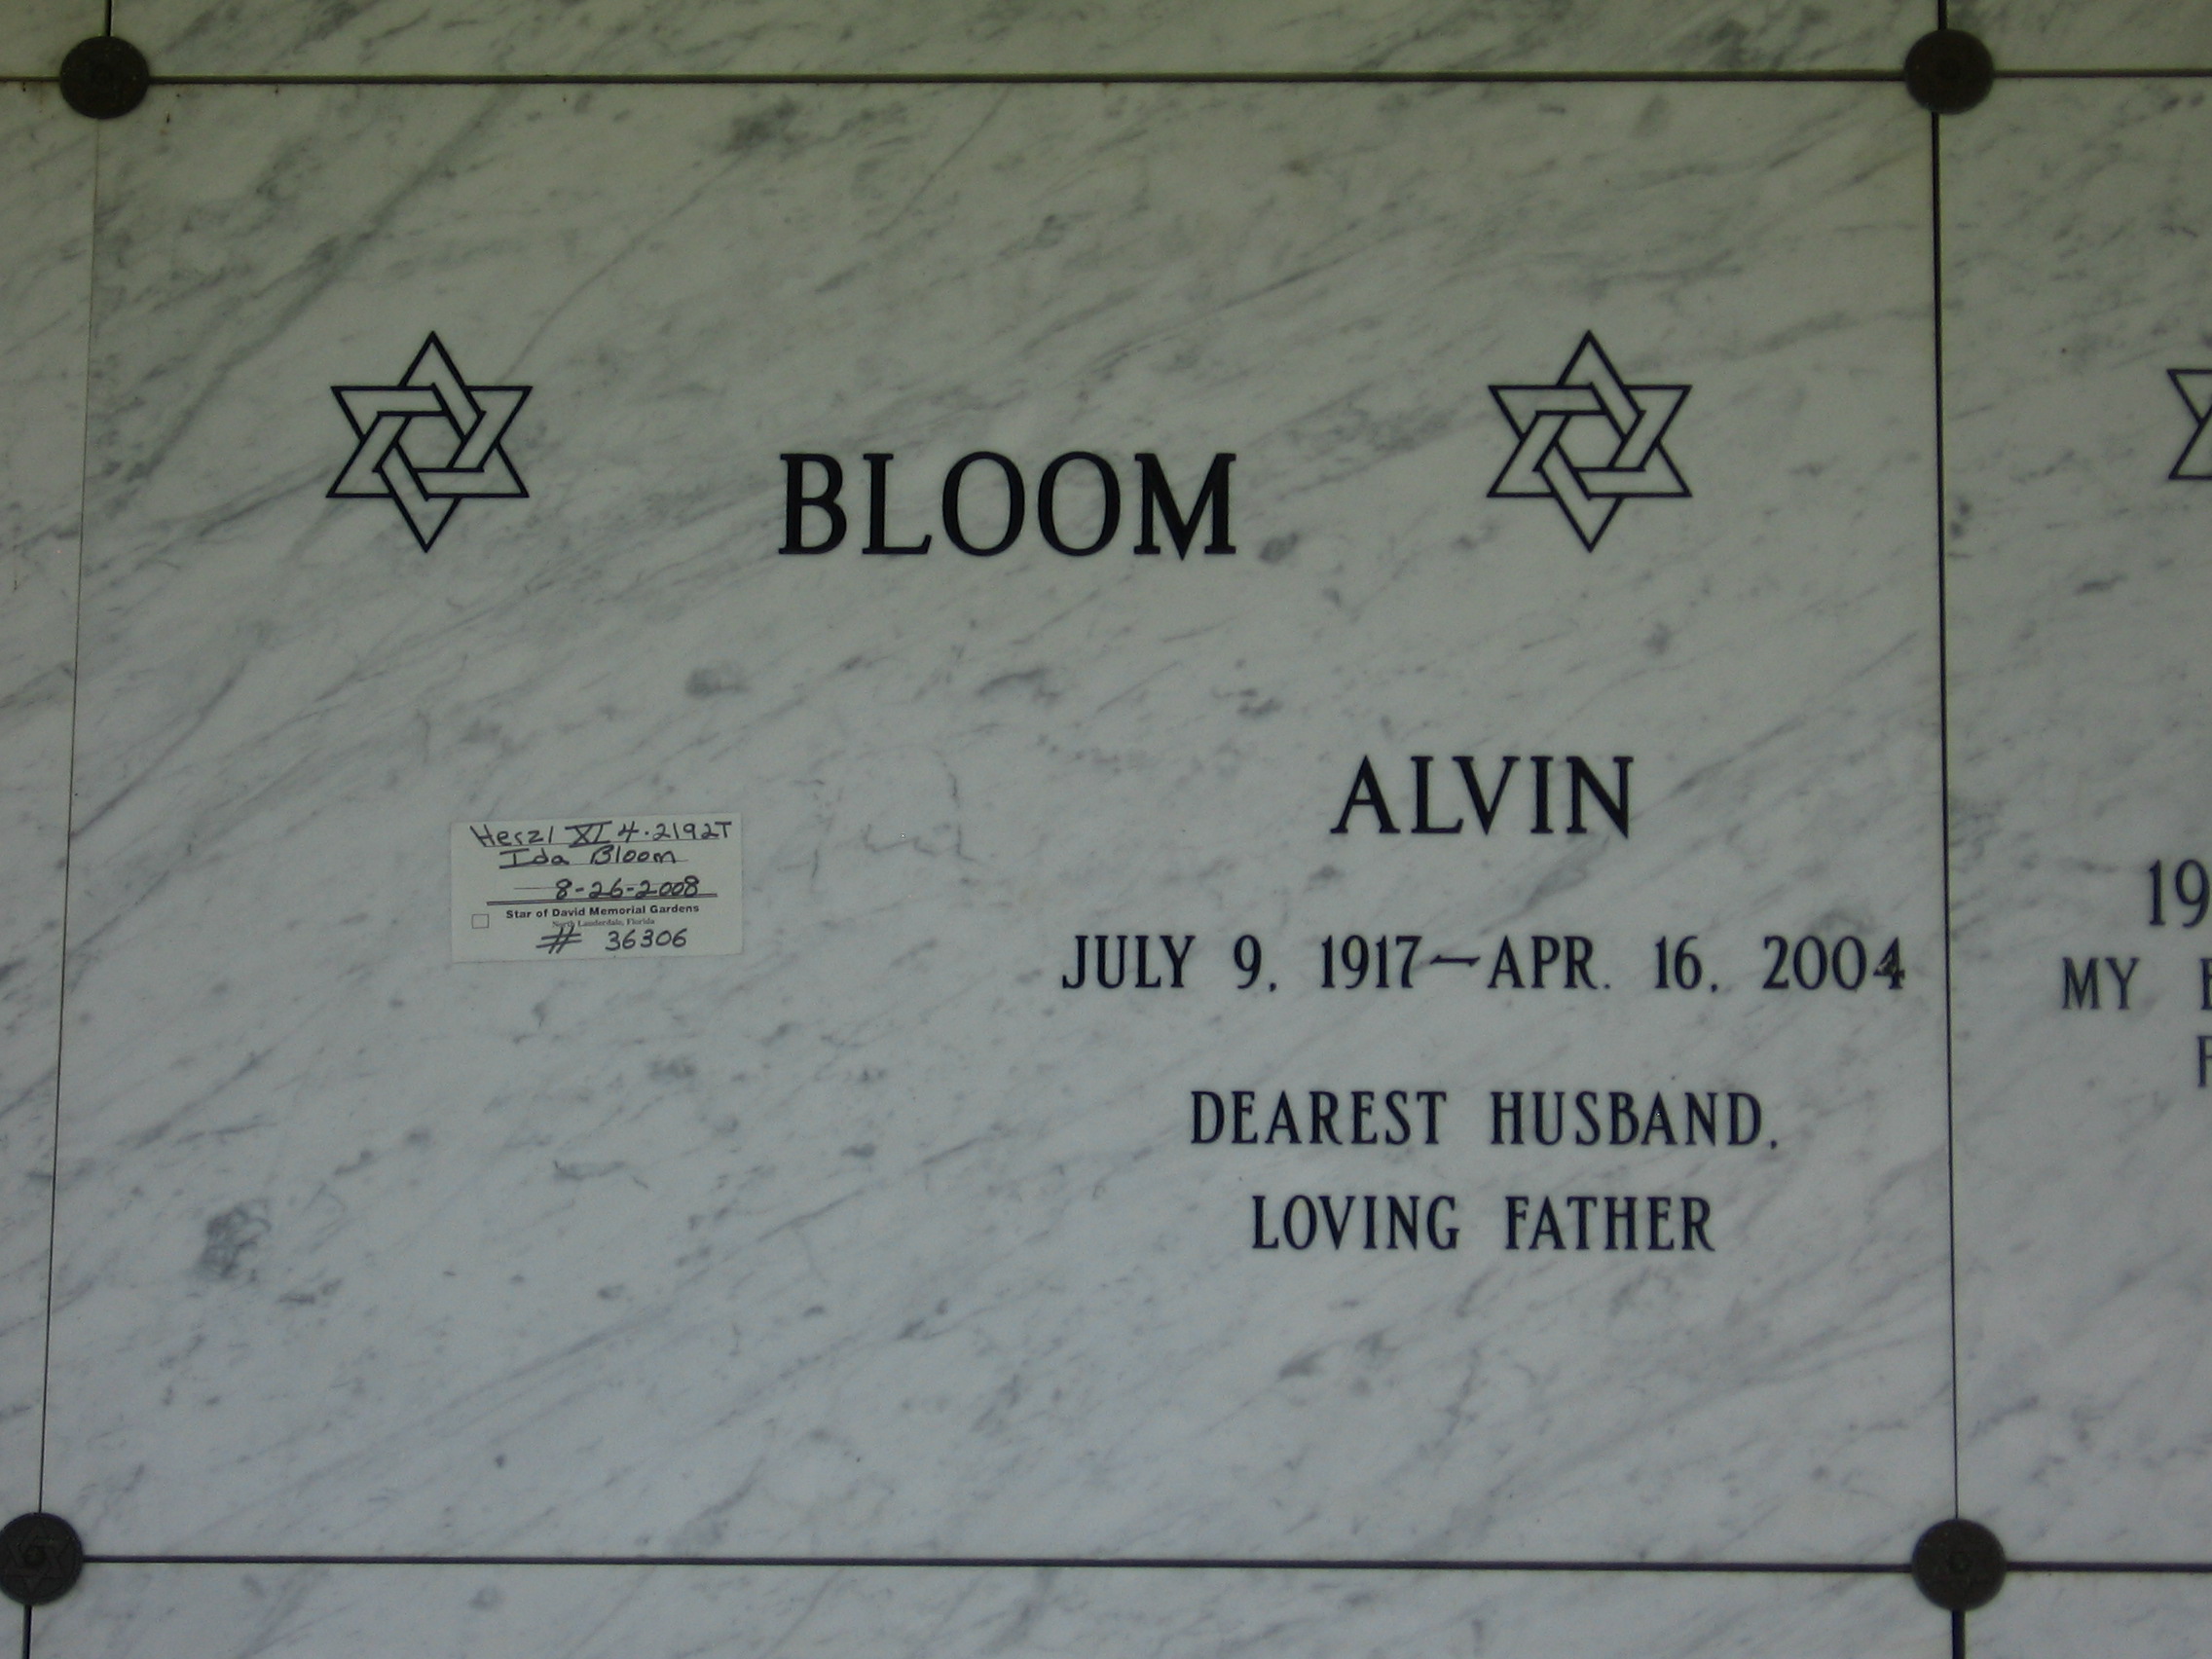 Alvin Bloom